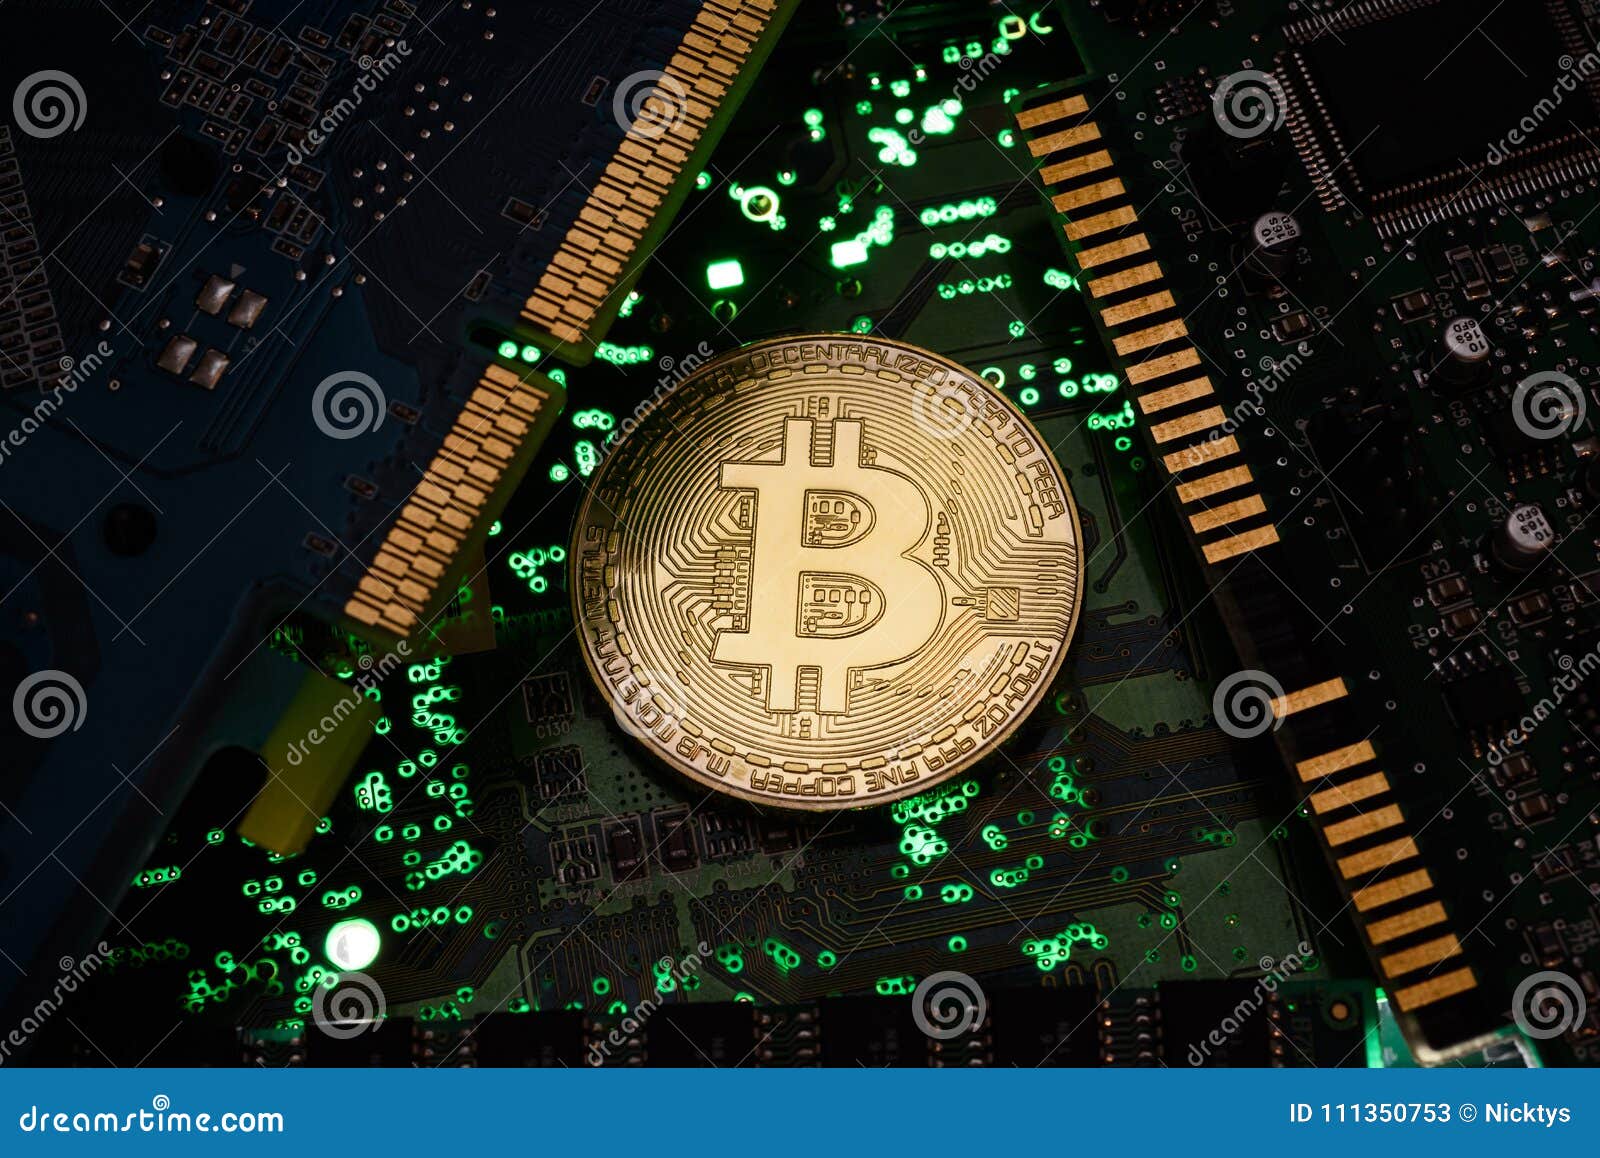 bitcoin with circuit board